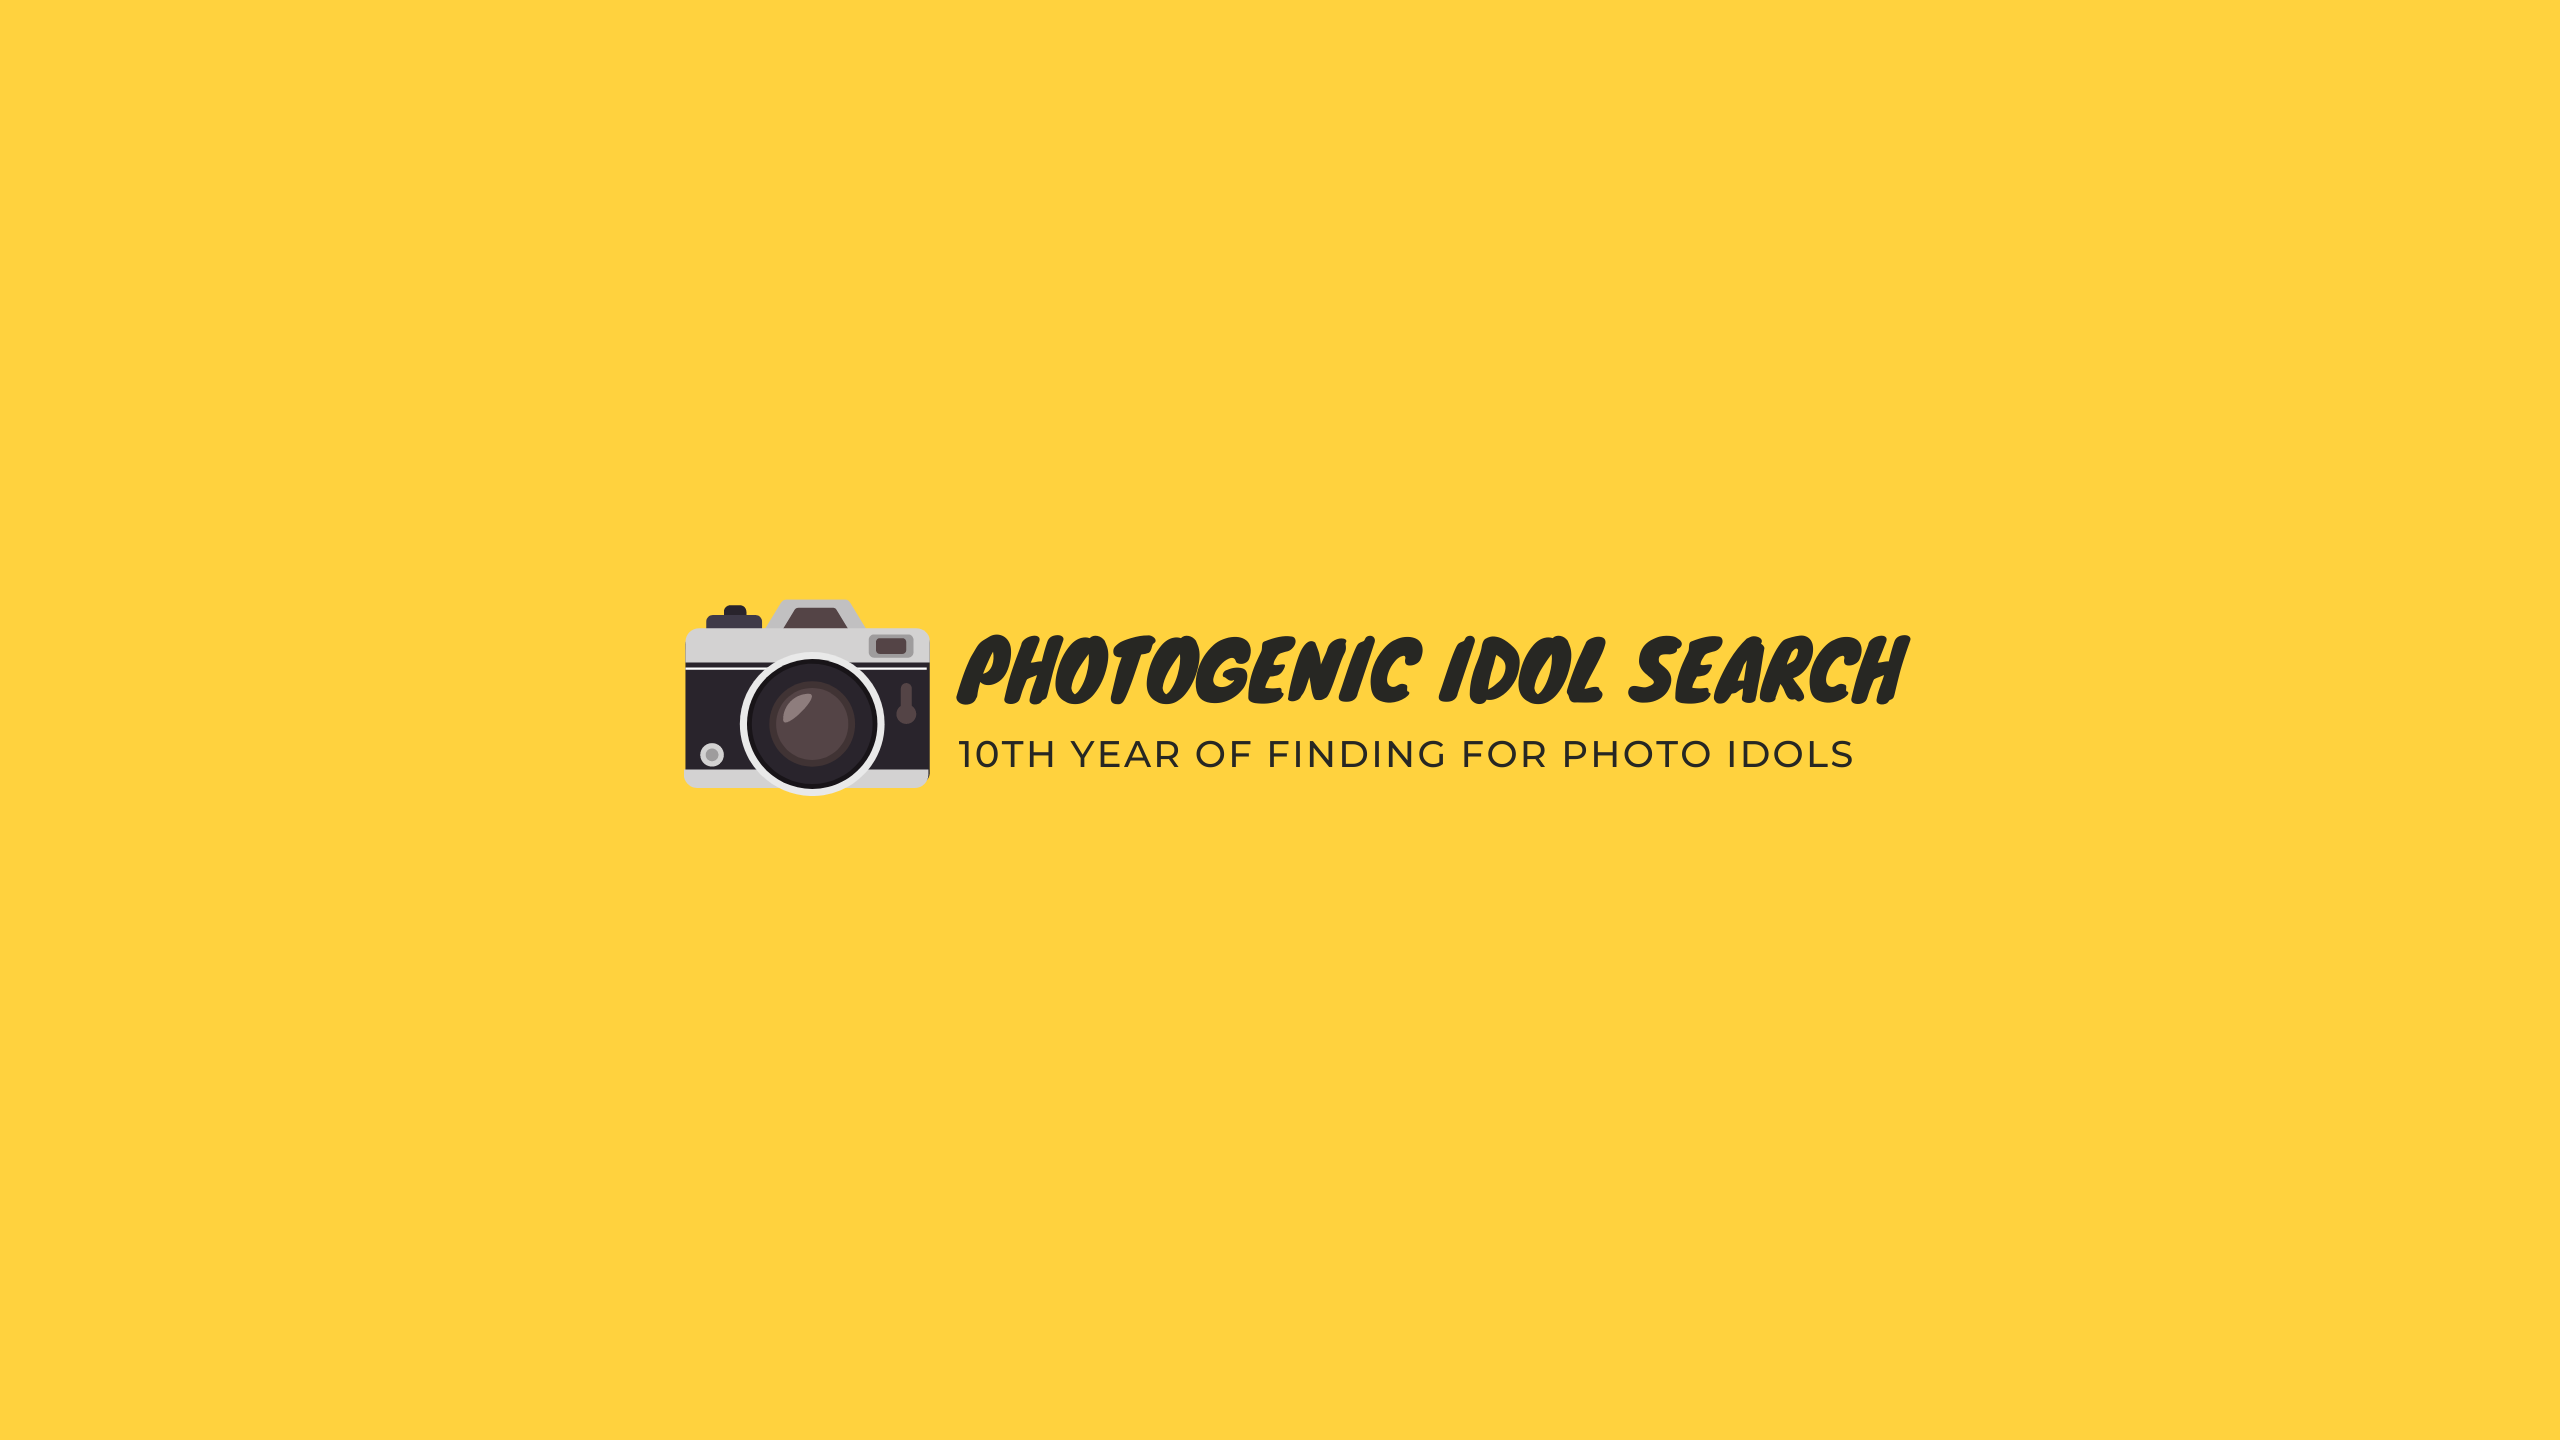 Photogenic idol search